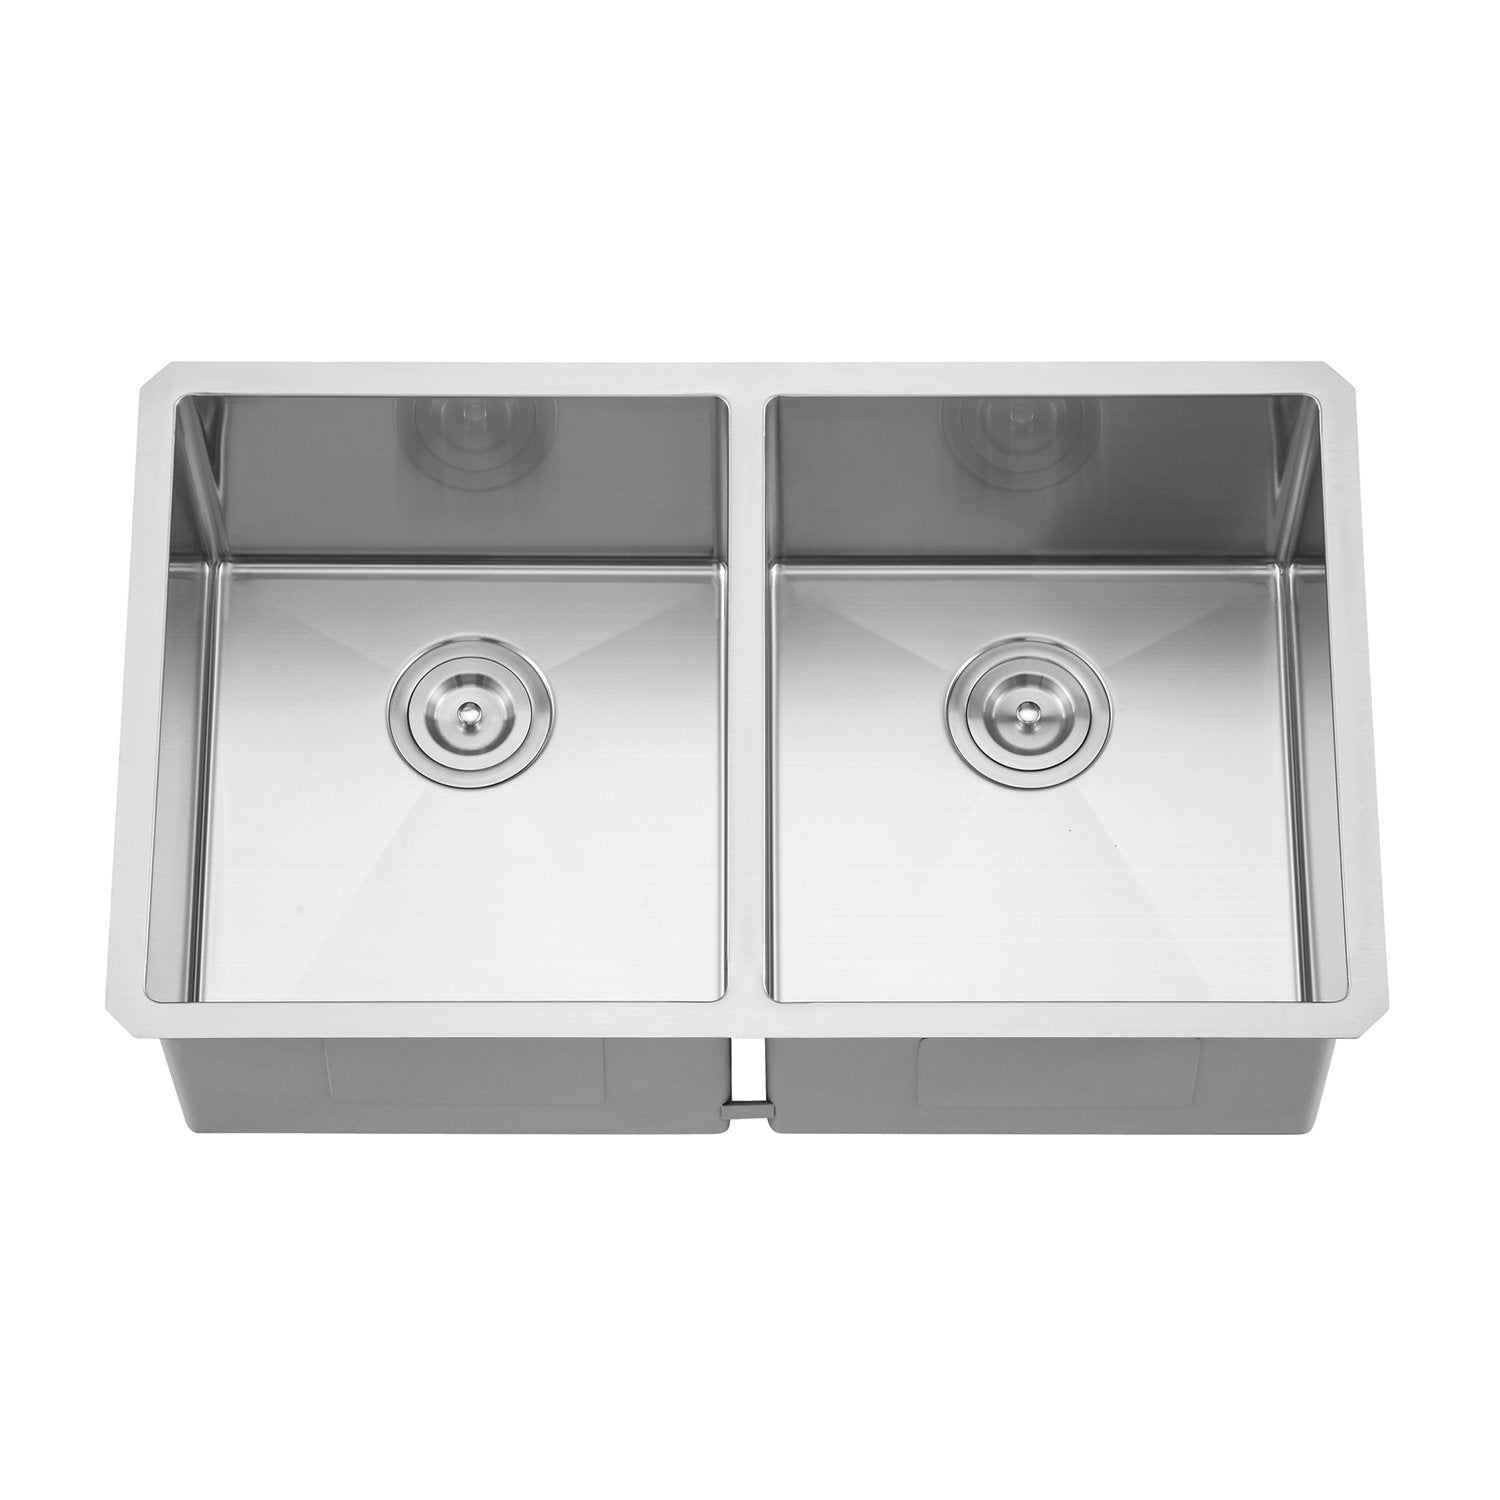 DAX Handmade 50/50 Double Bowl Undermount Kitchen Sink, 18 Gauge Stainless Steel, Brushed Finish, 32 x 19 x 10 Inches (DAX-3219ER10)